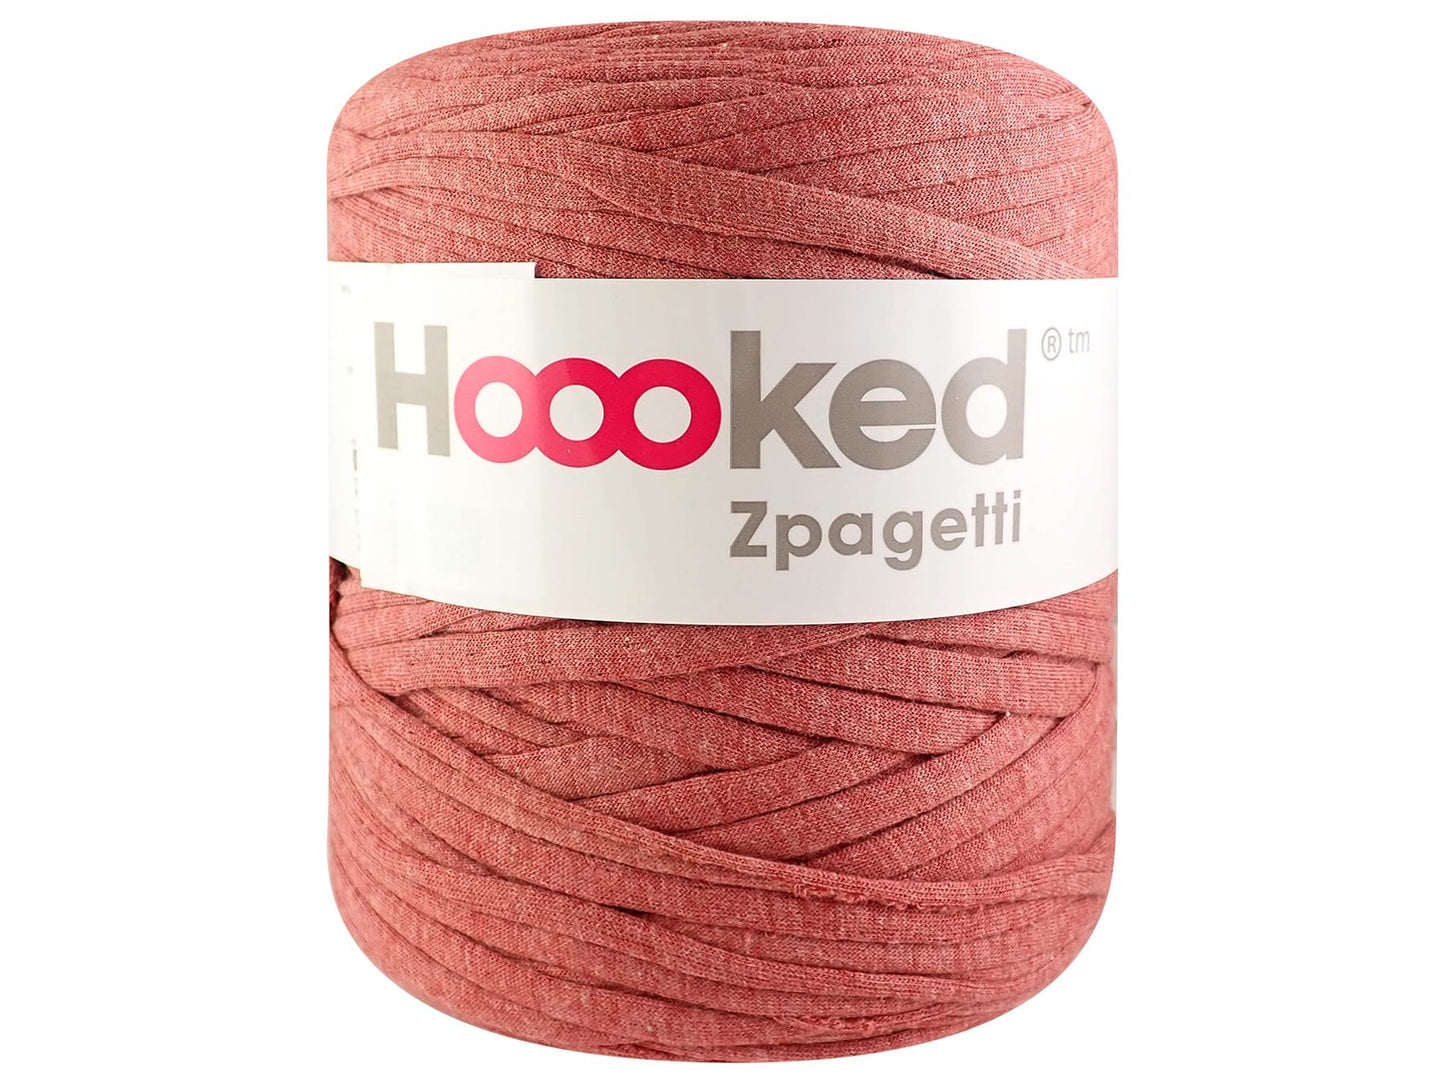 Hoooked Zpagetti Light Brown Cotton T-Shirt Yarn - 120M 700g